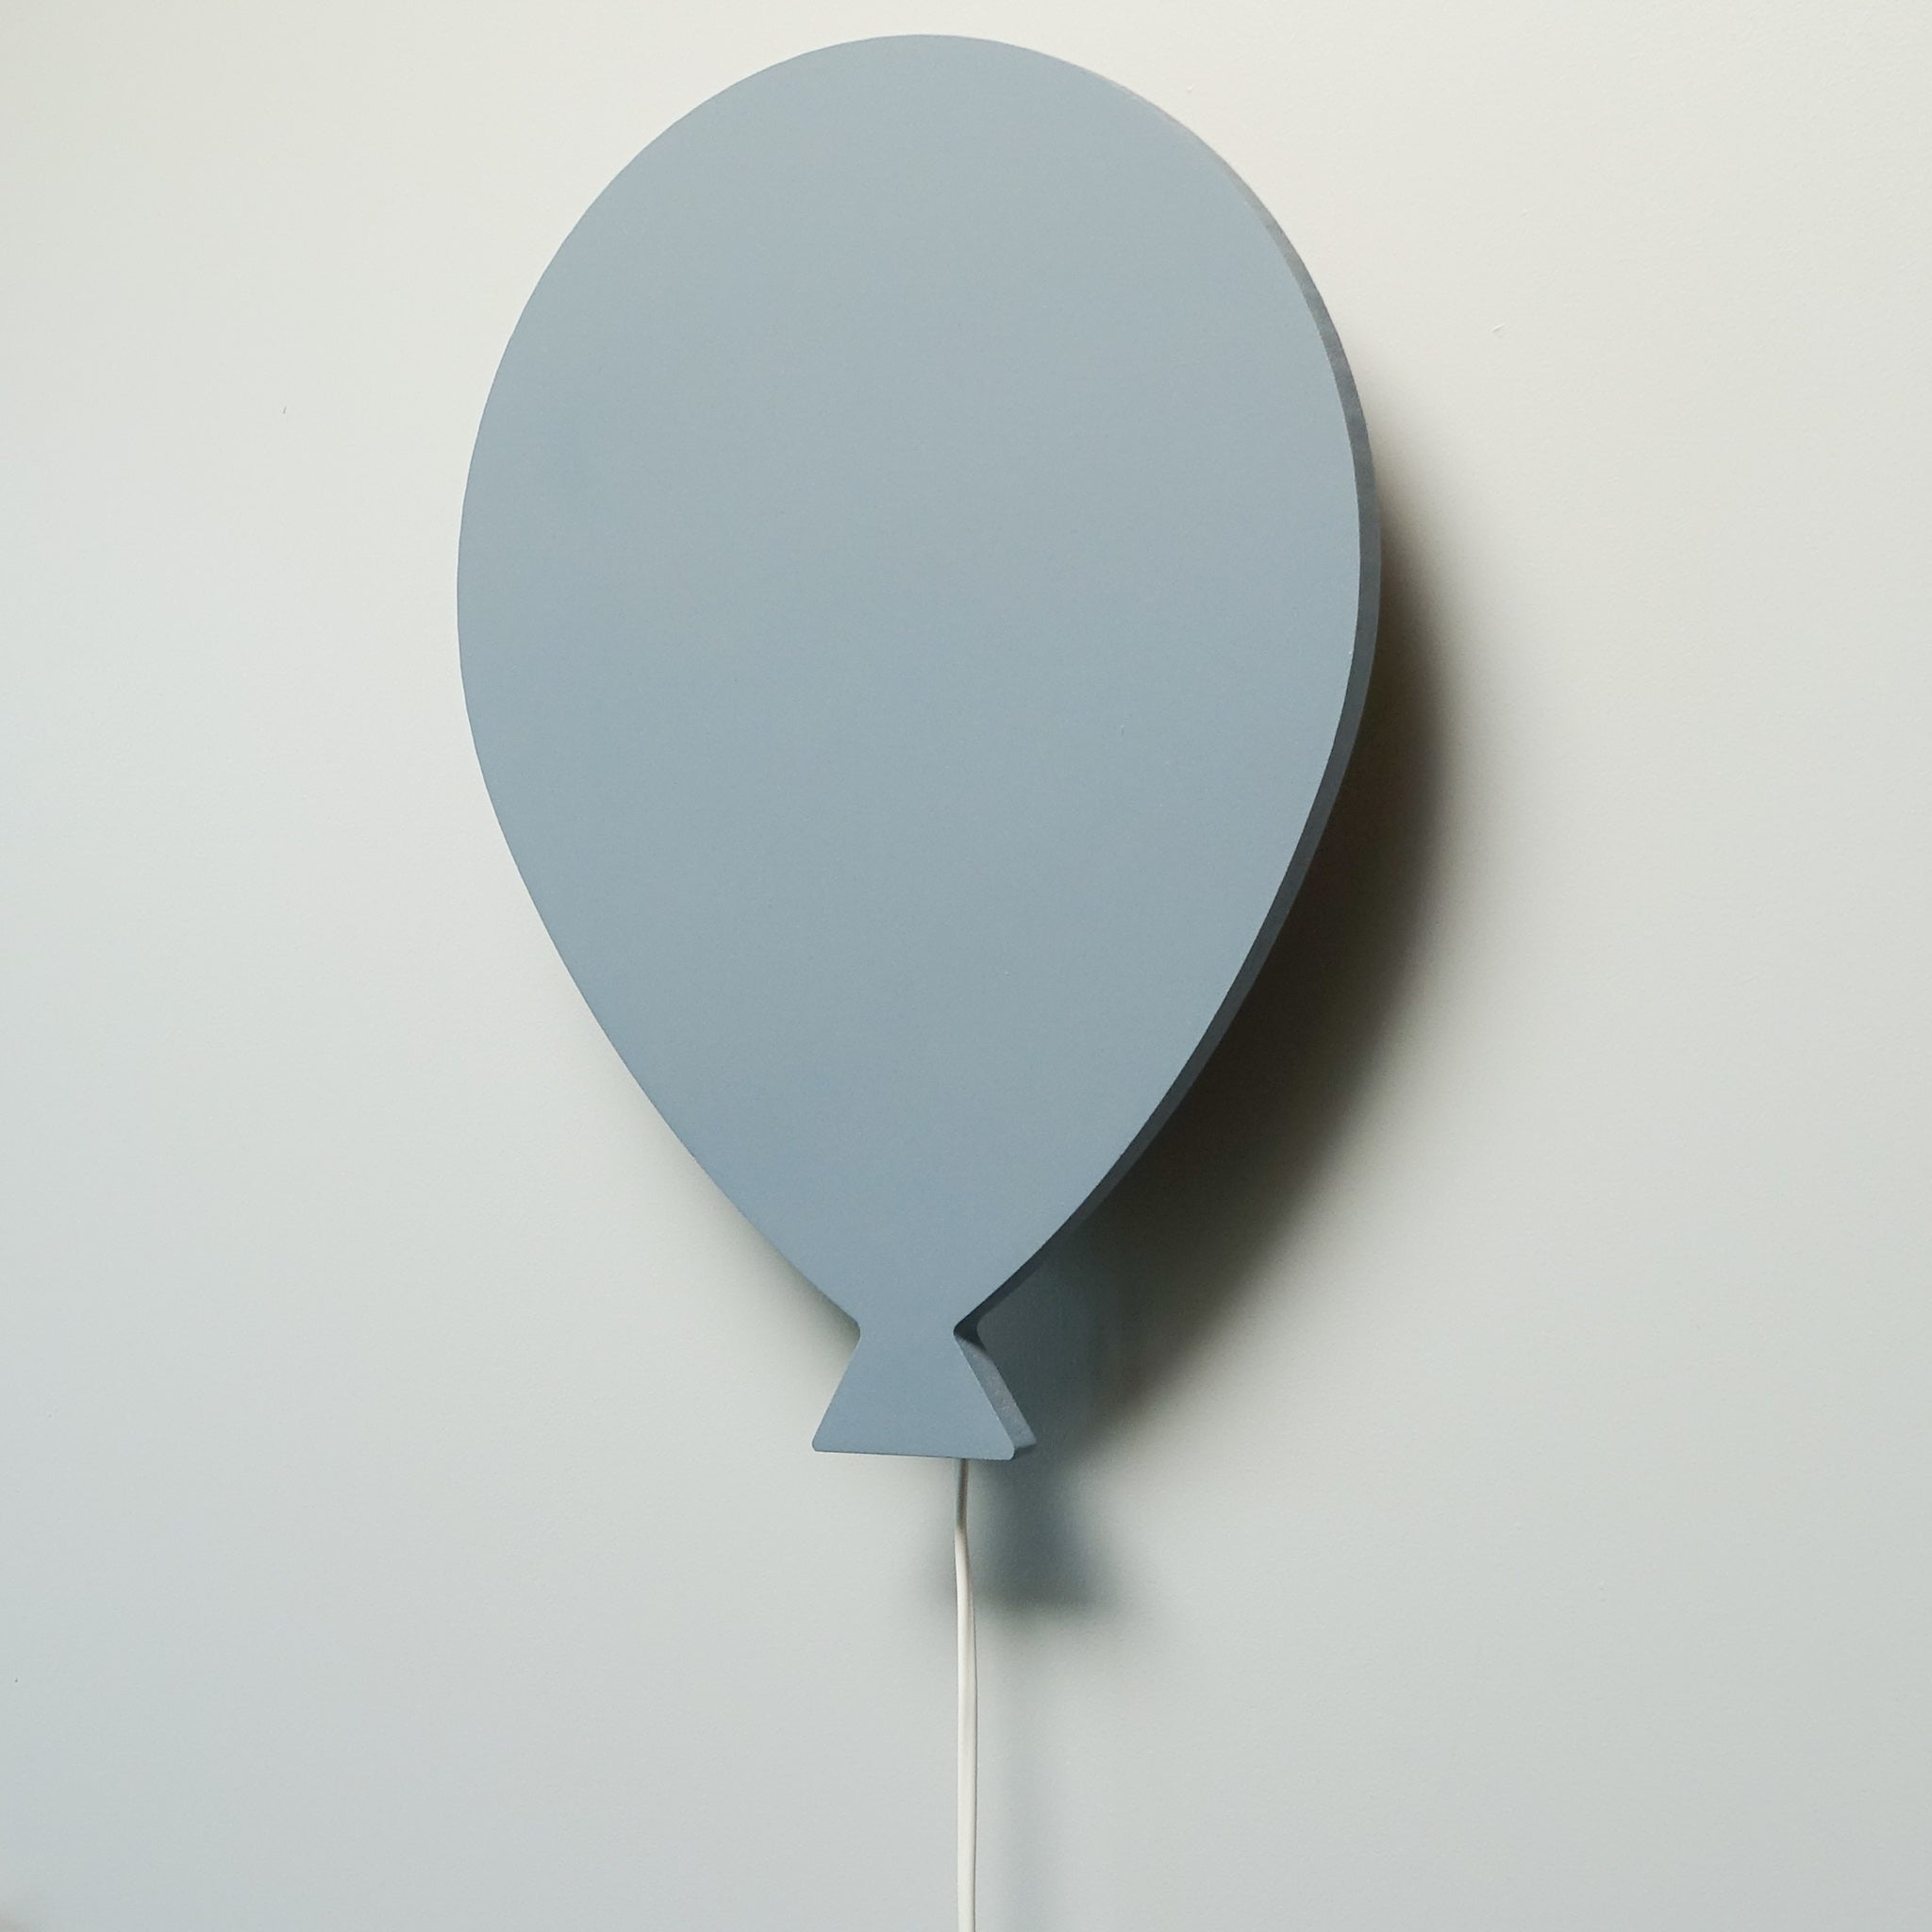 Wooden children’s room wall lamp | Balloon - Denim Drift - toddie.com